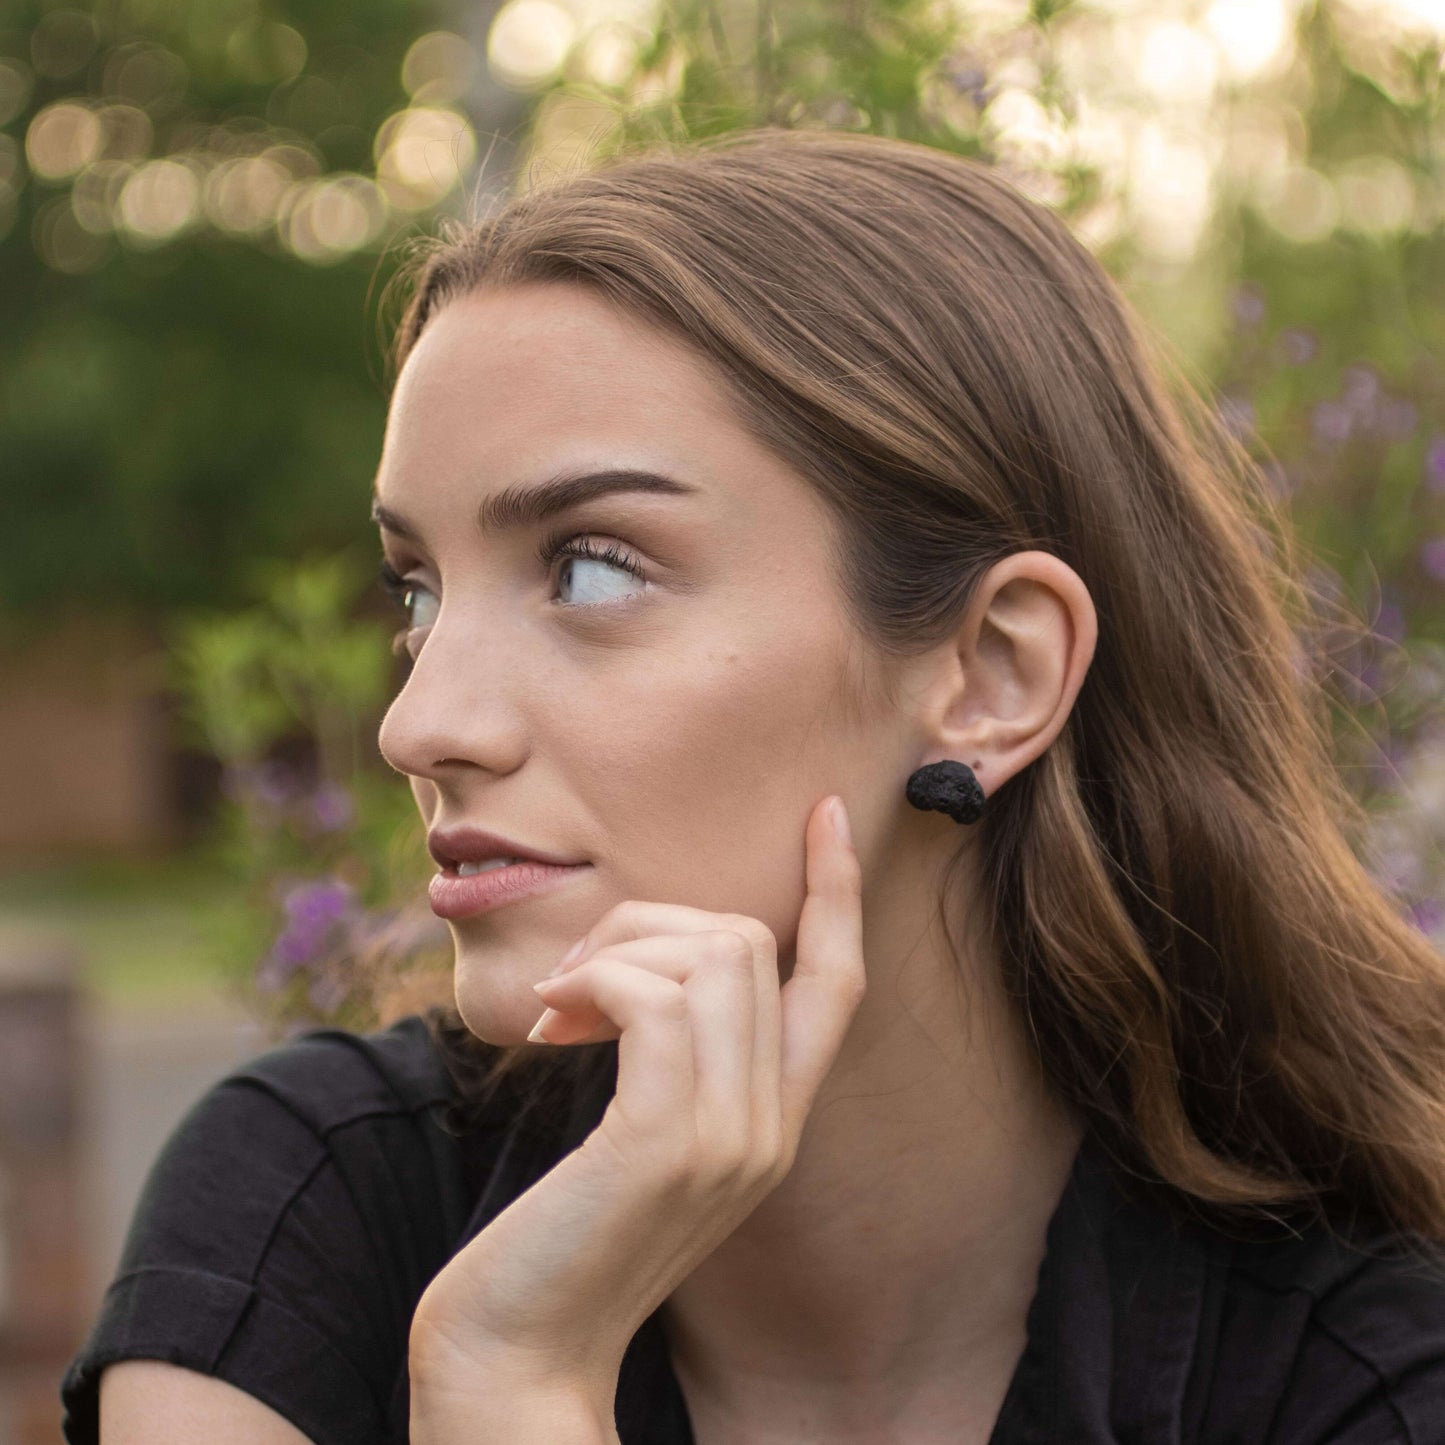 Handmade polymer clay black poodle stud earrings shown on model's ear